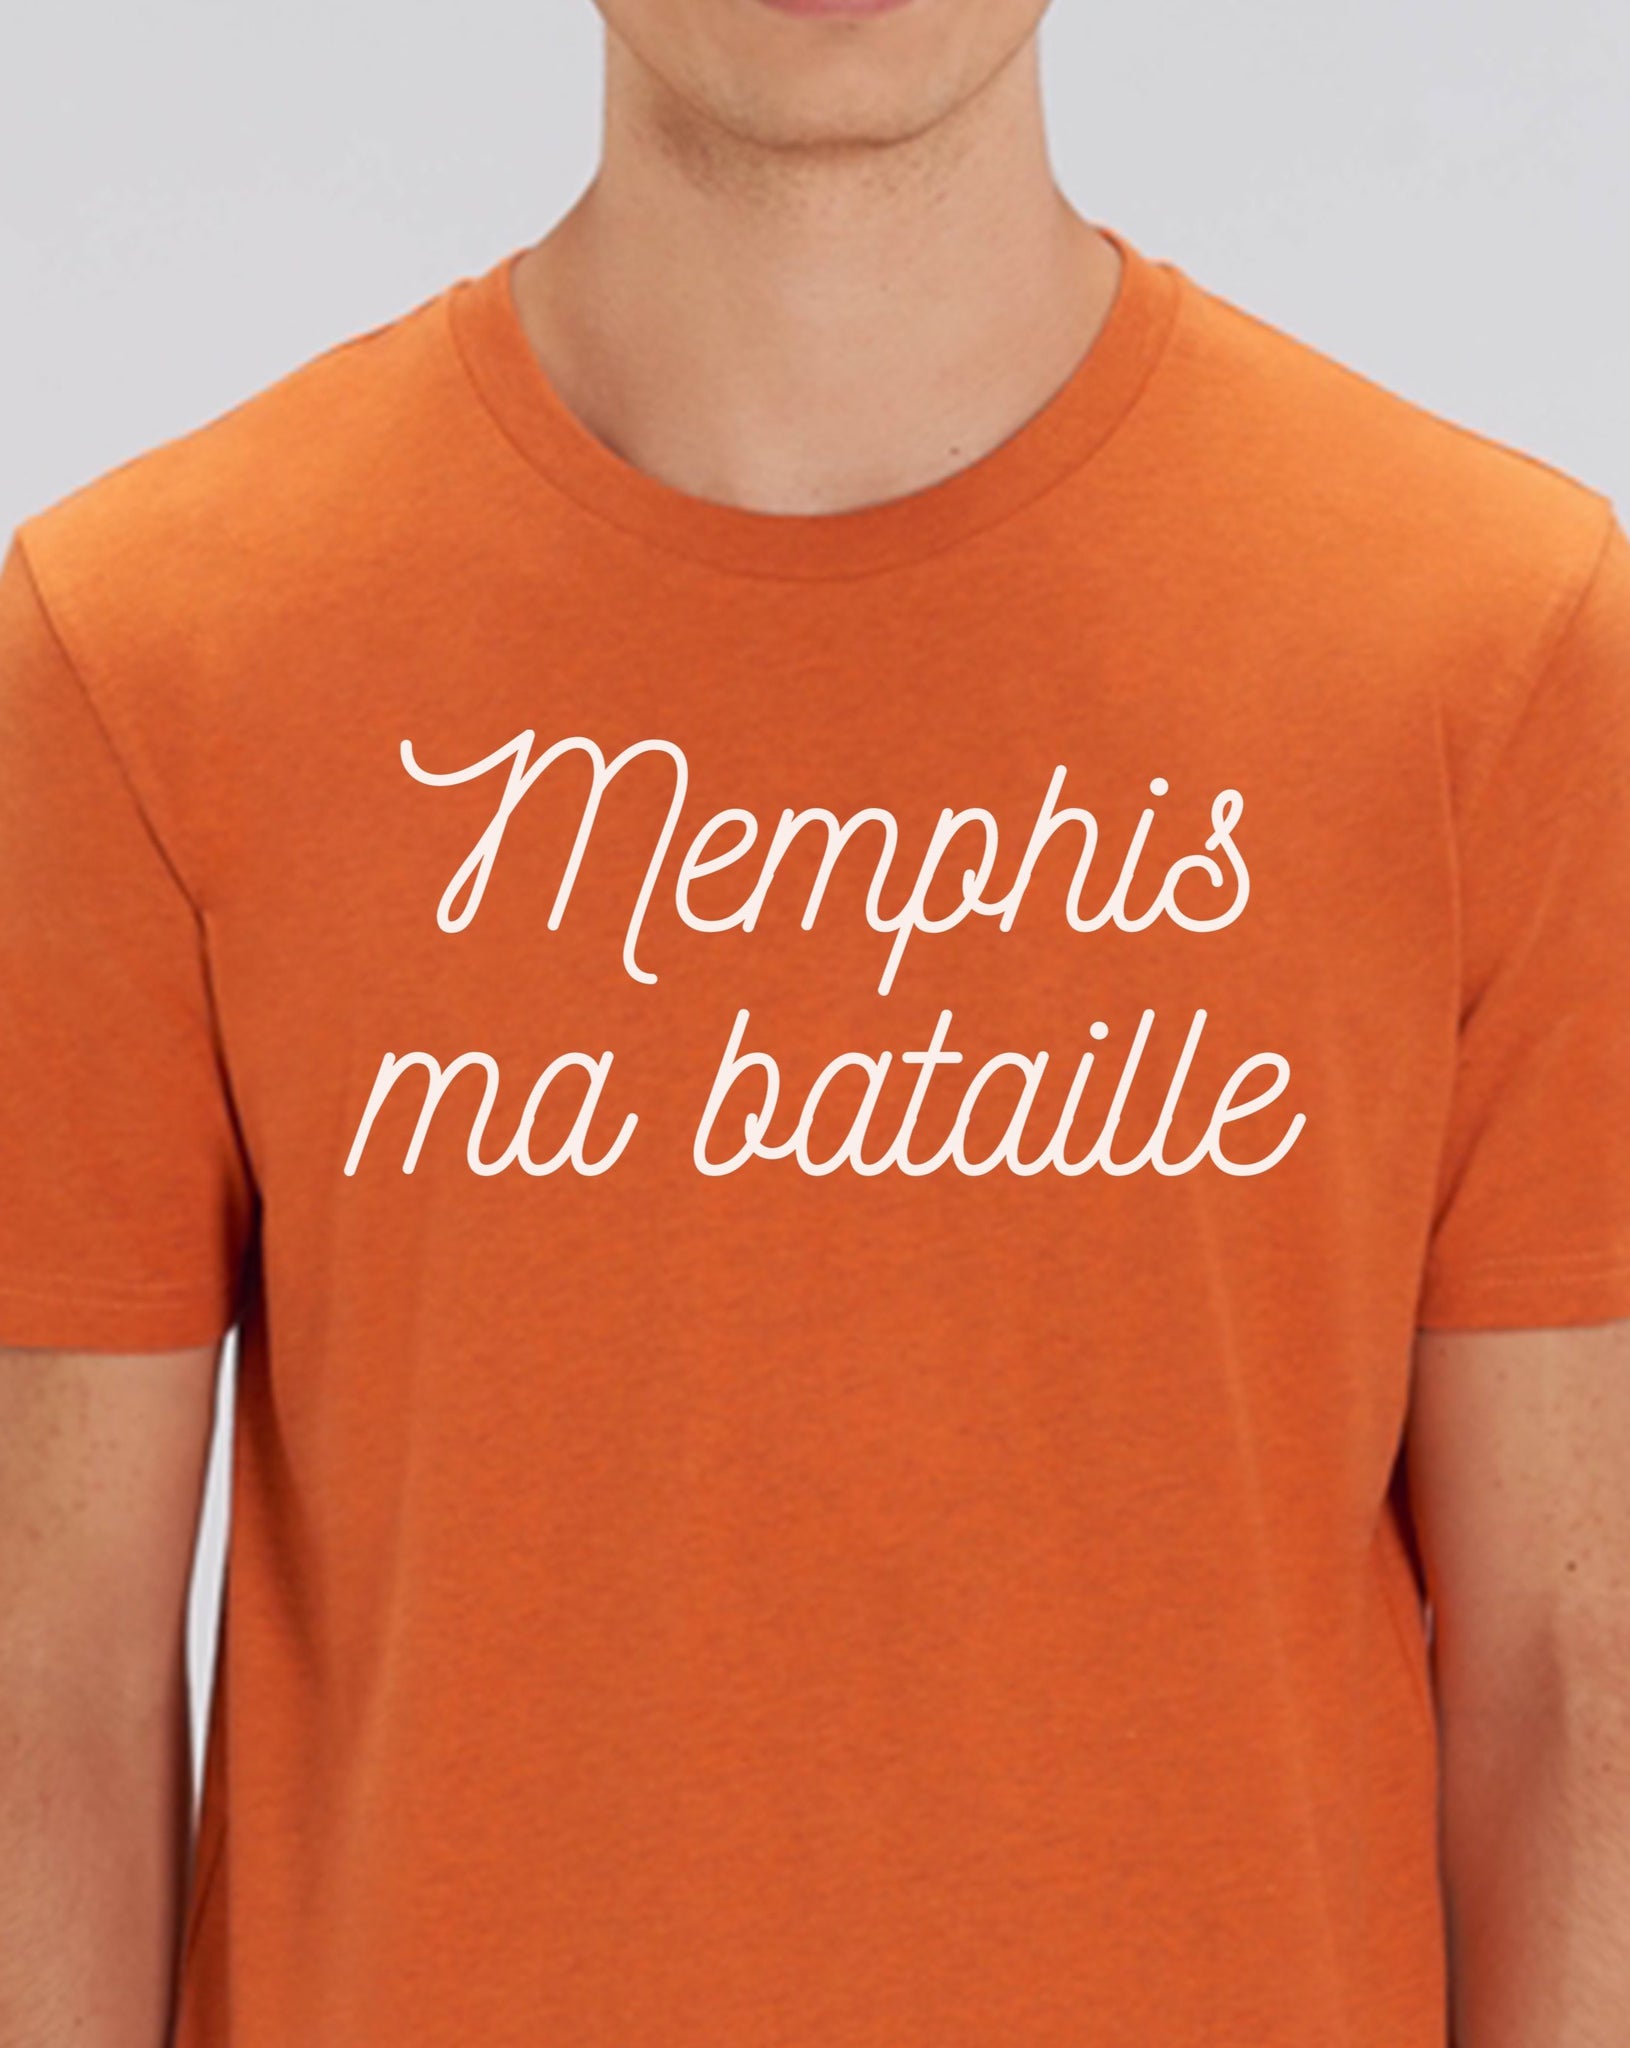 Tee Shirt "Memphis ma bataille" - Foot Dimanche 